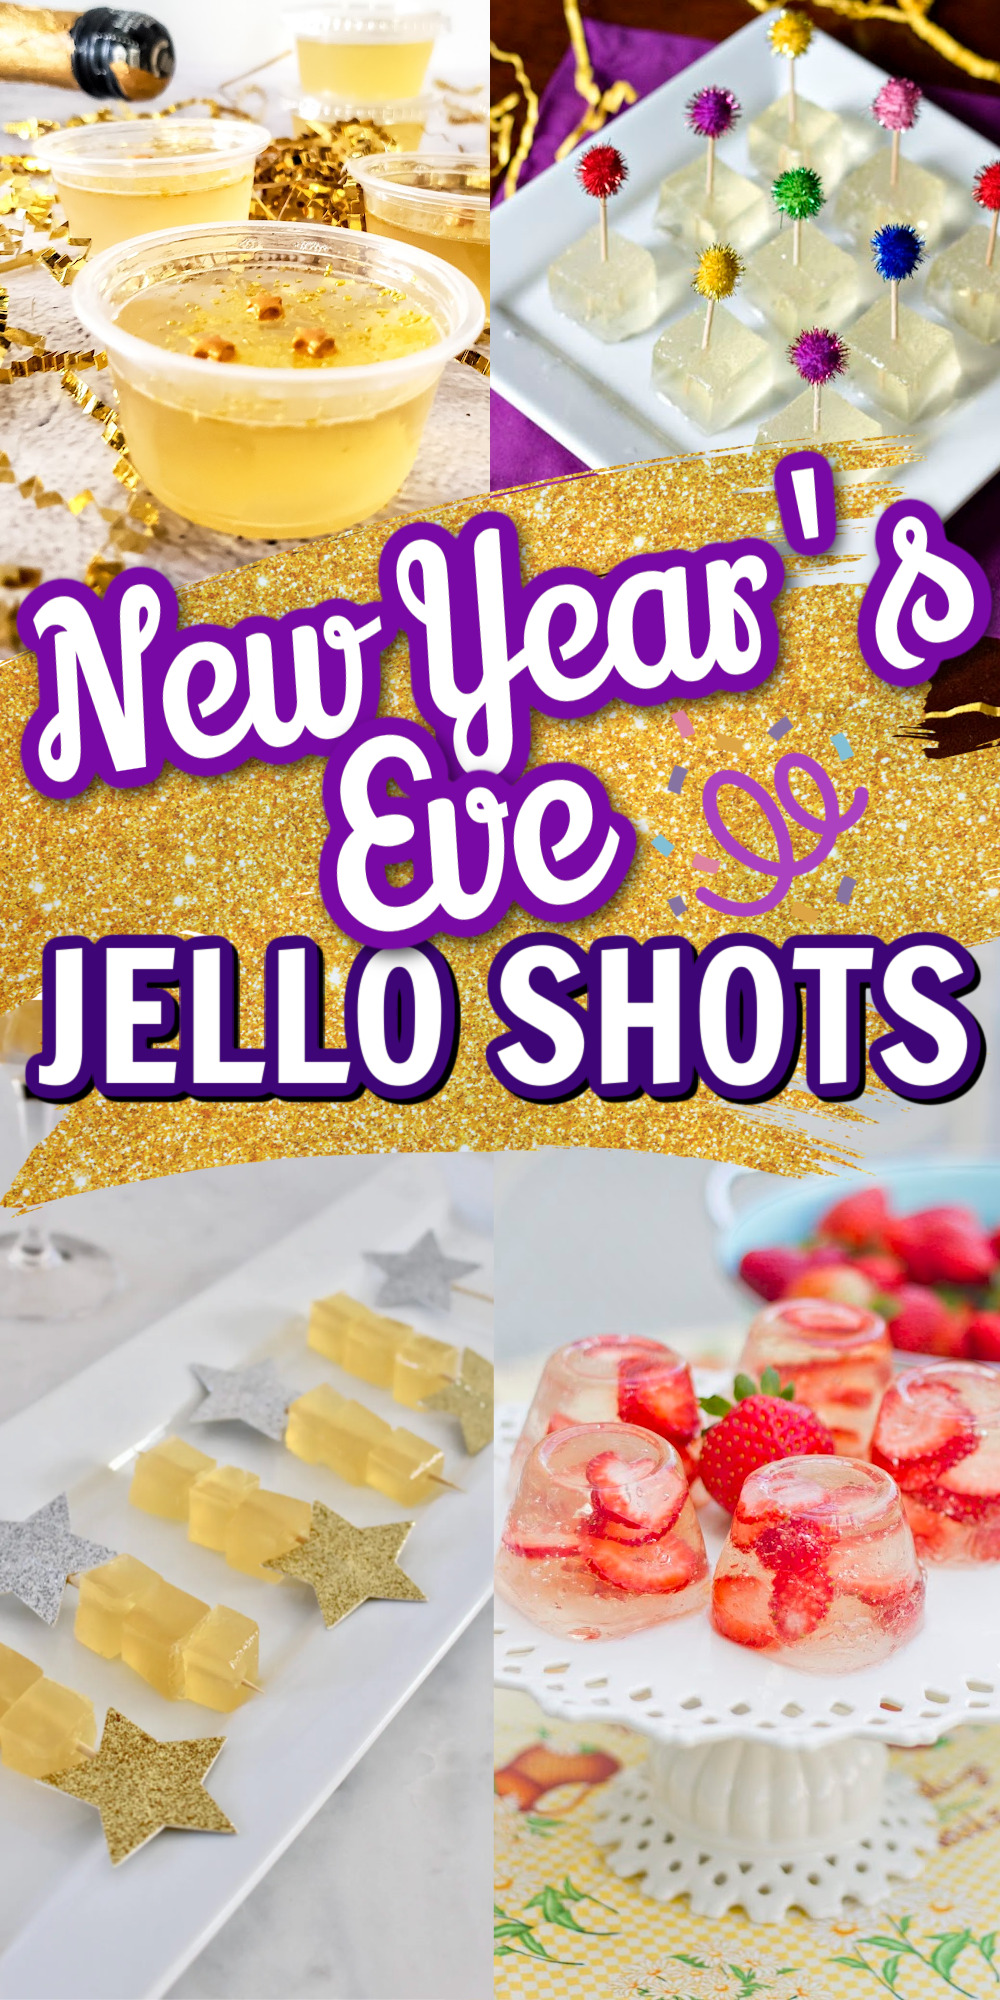 18 New Year’s Eve Jello Shots